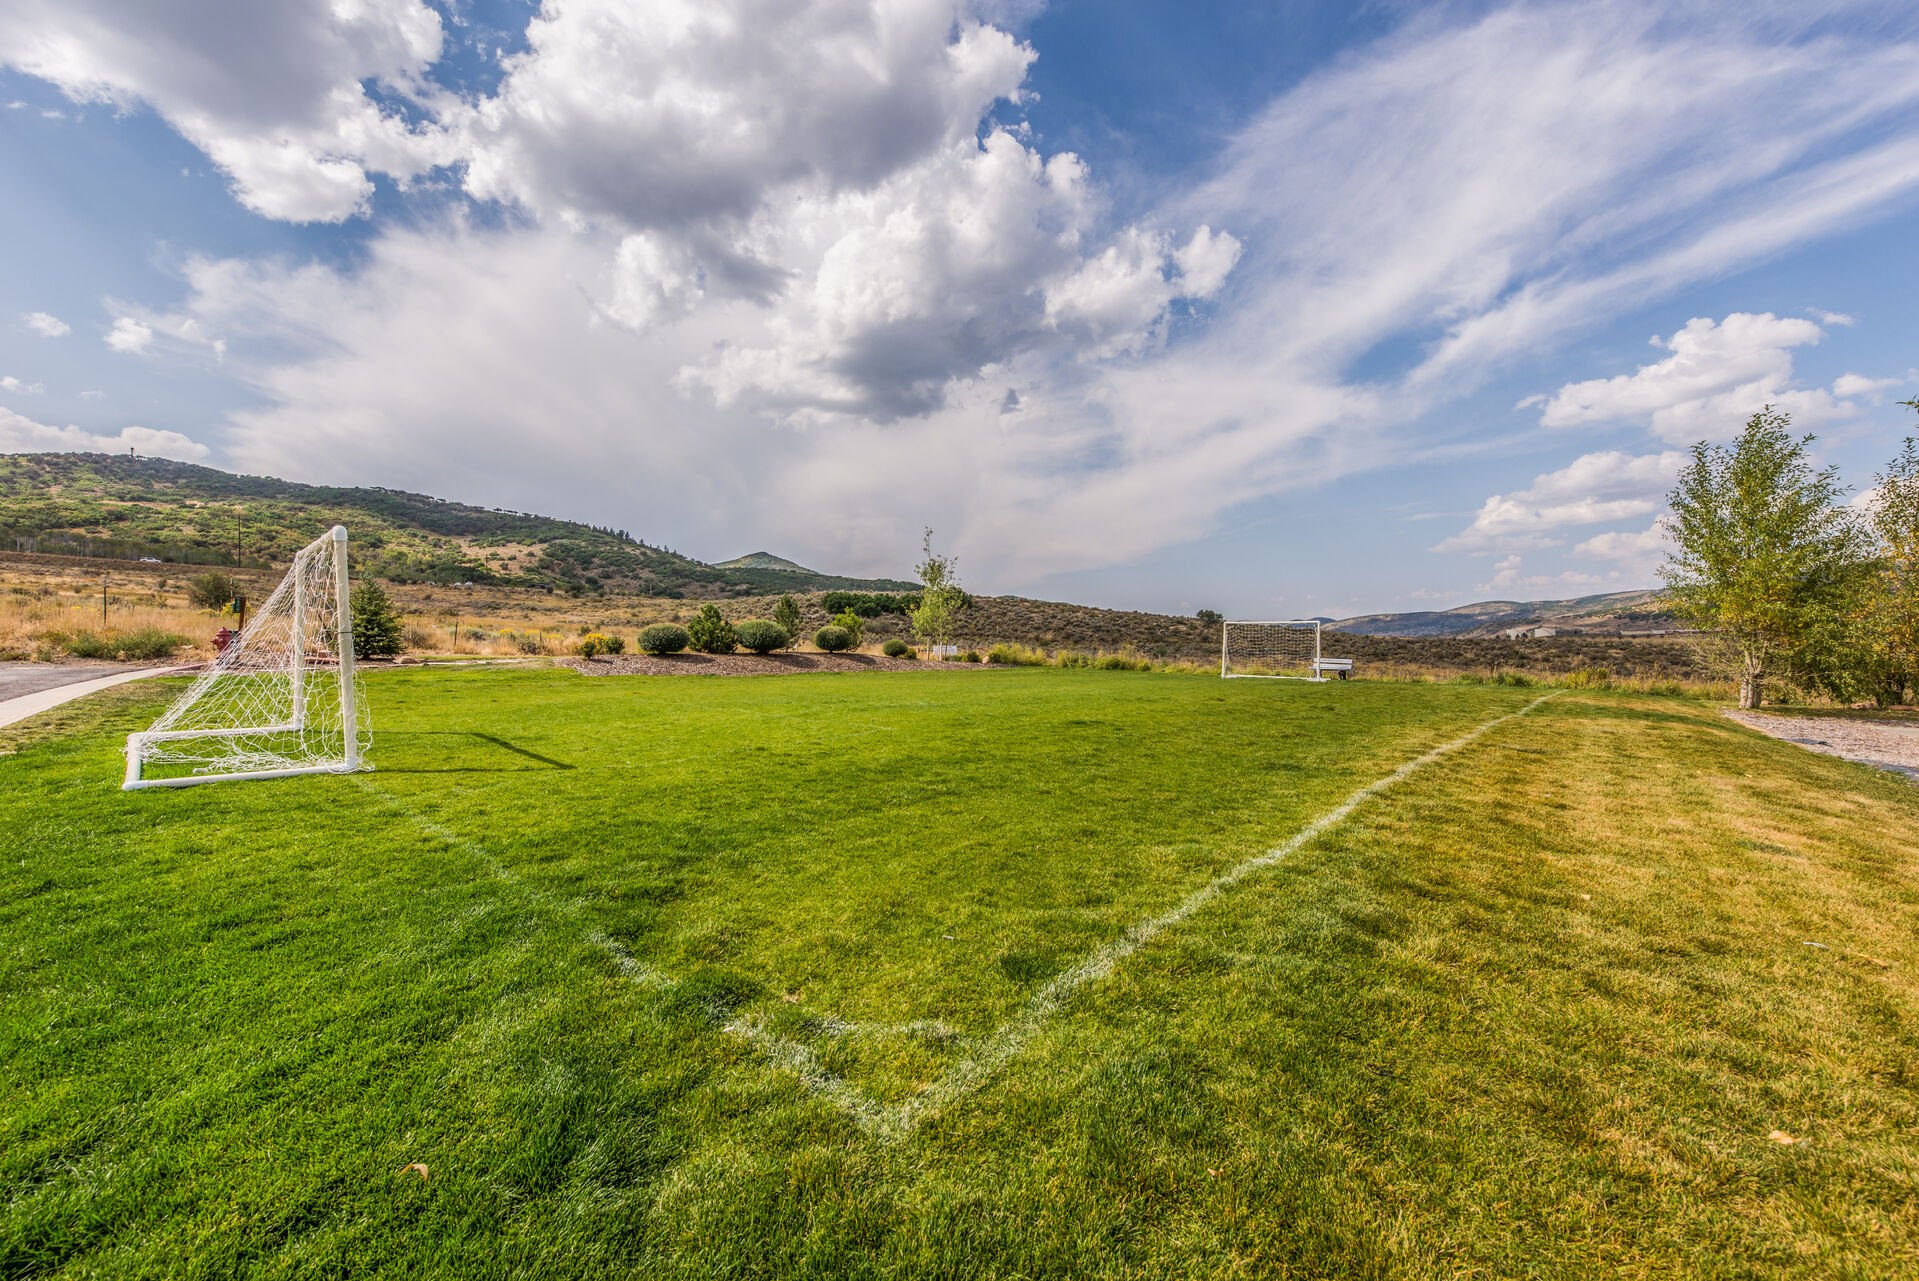 Bear Hollow Community Soccer Field